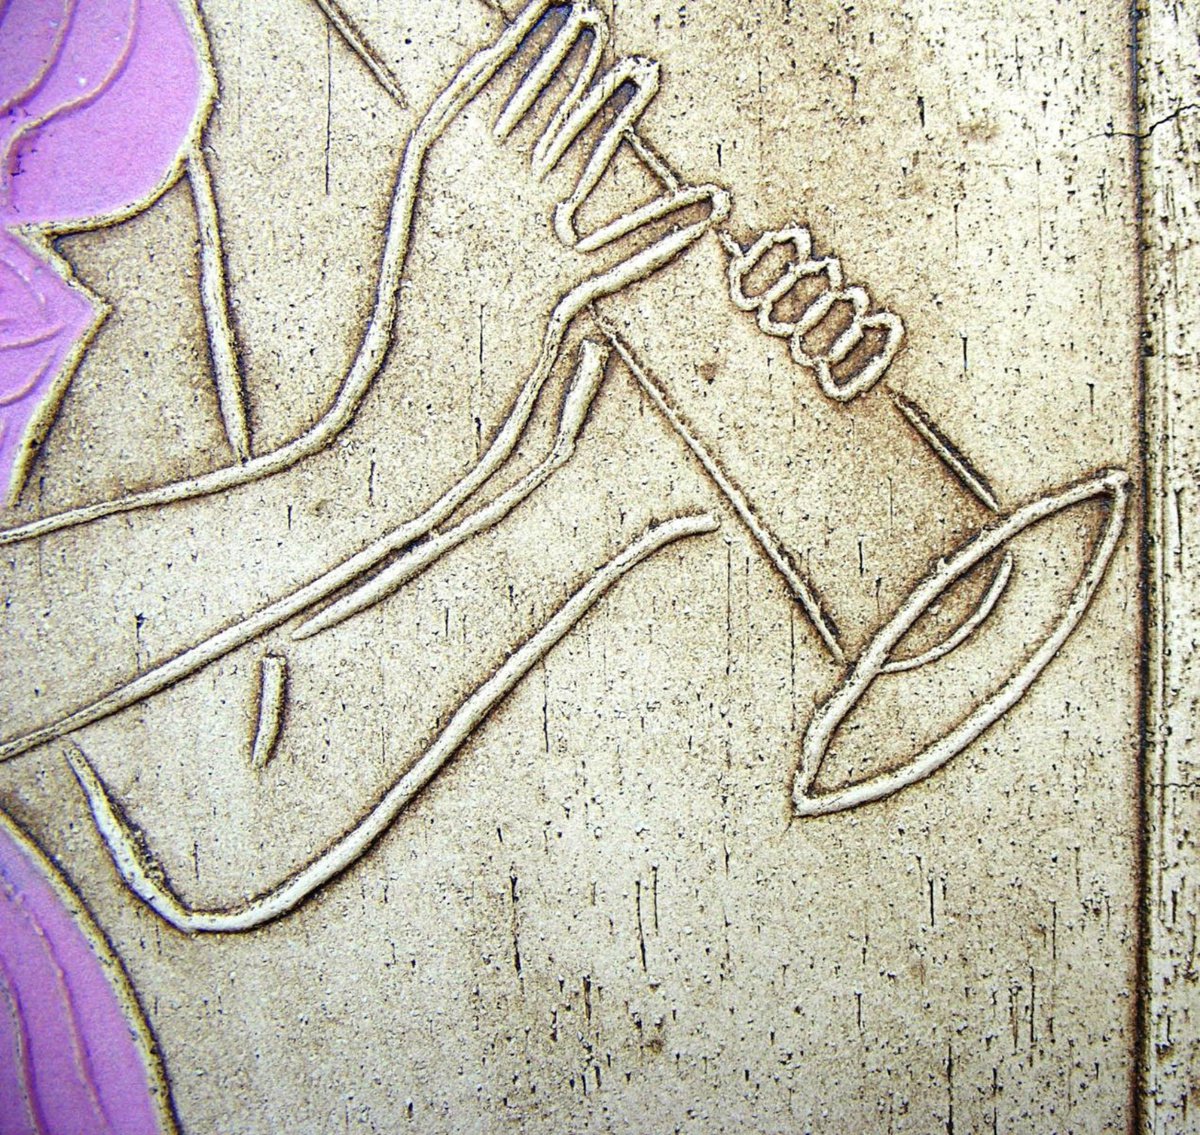 Euterpe  -  Muse of Music - (Framed Ceramic Panel)